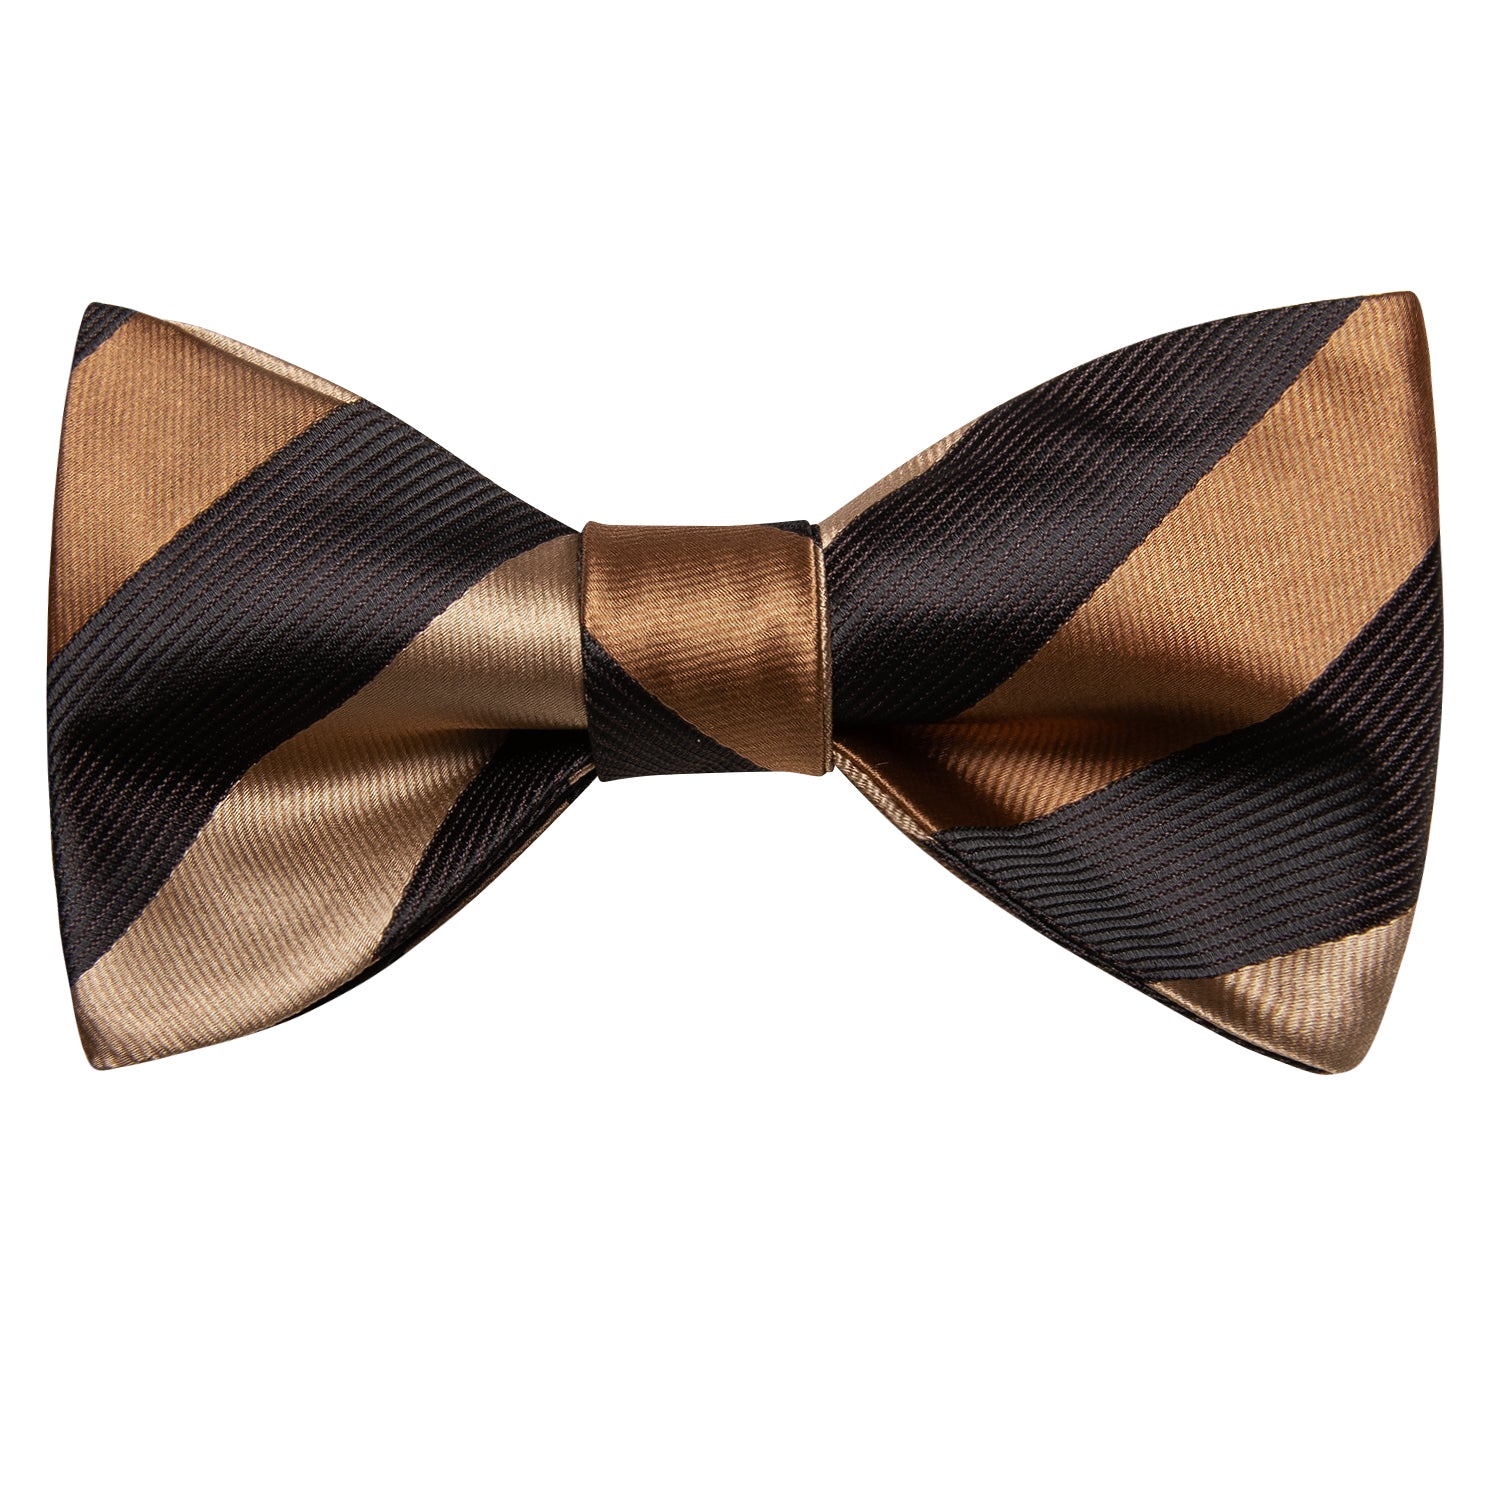 New Brown Golden Strip Self-tied Bow Tie Pocket Square Cufflinks Set